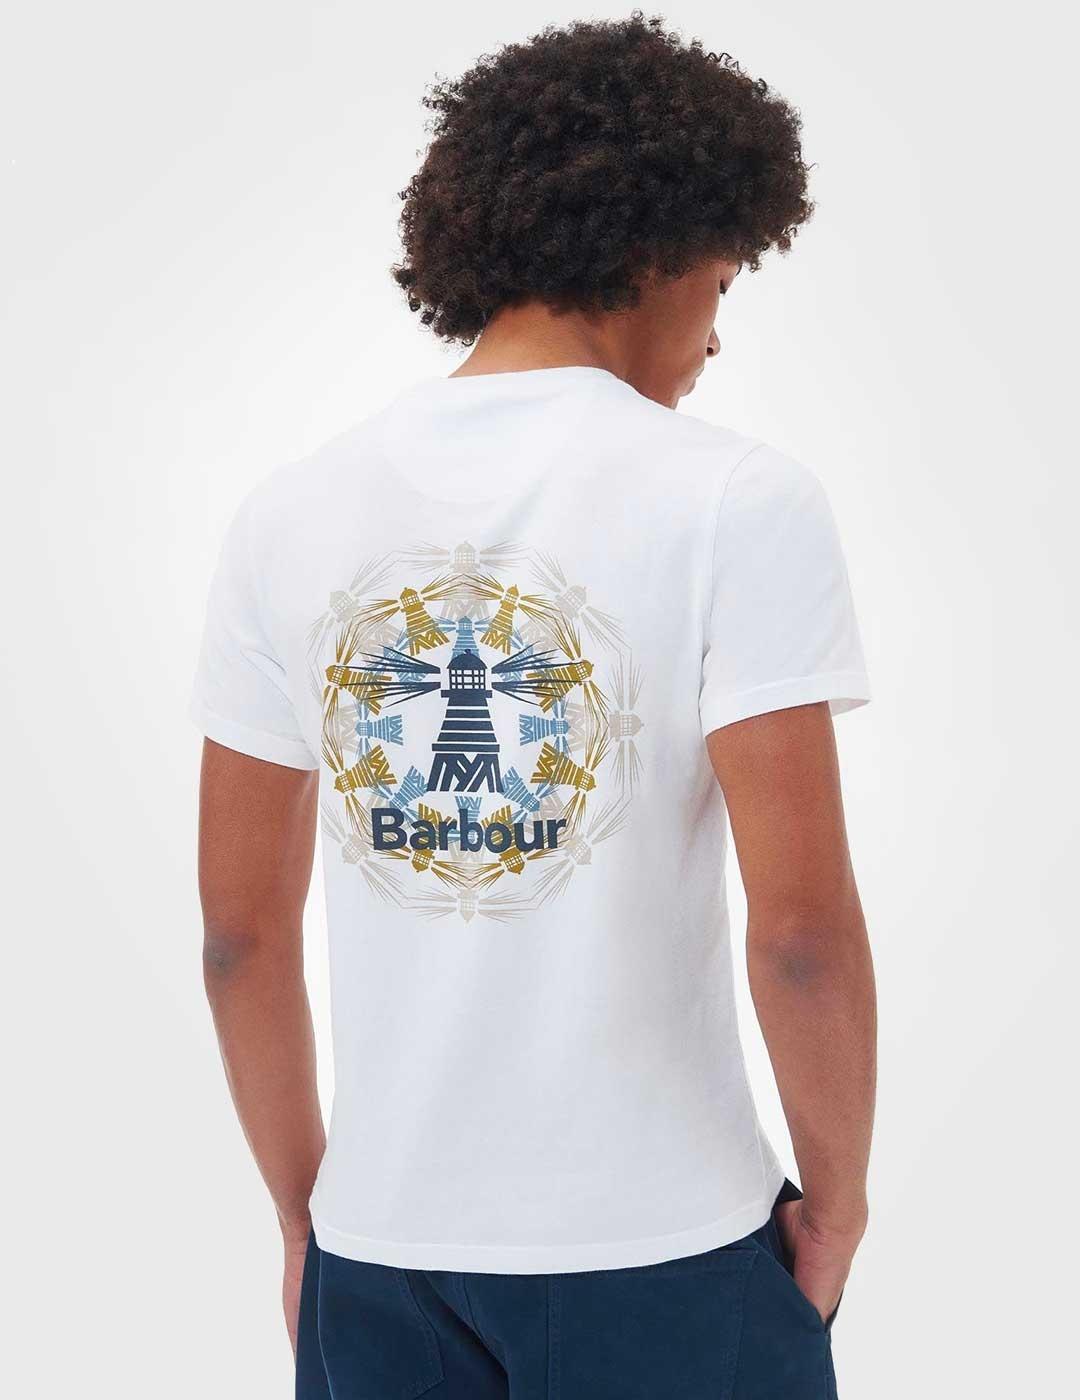 Camiseta Barbour Brathay blanca para hombre